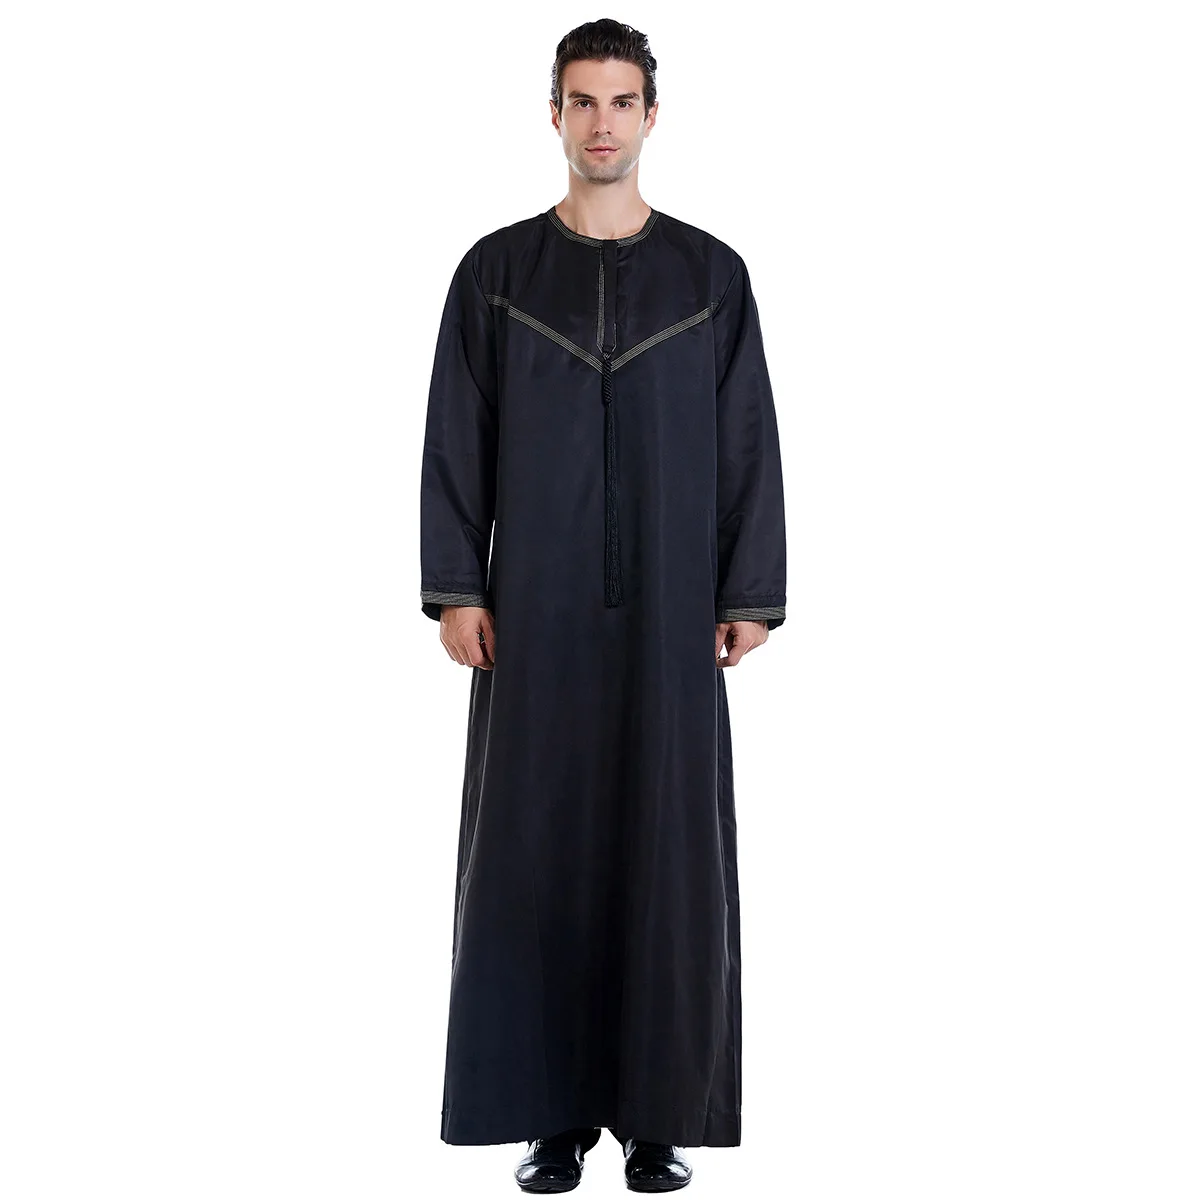 

Arab Kaftan Saudi Thobe Thoub Man Abaya Robe Daffah Dishdasha Muslim Clothing For Men, White, gray, black, beige